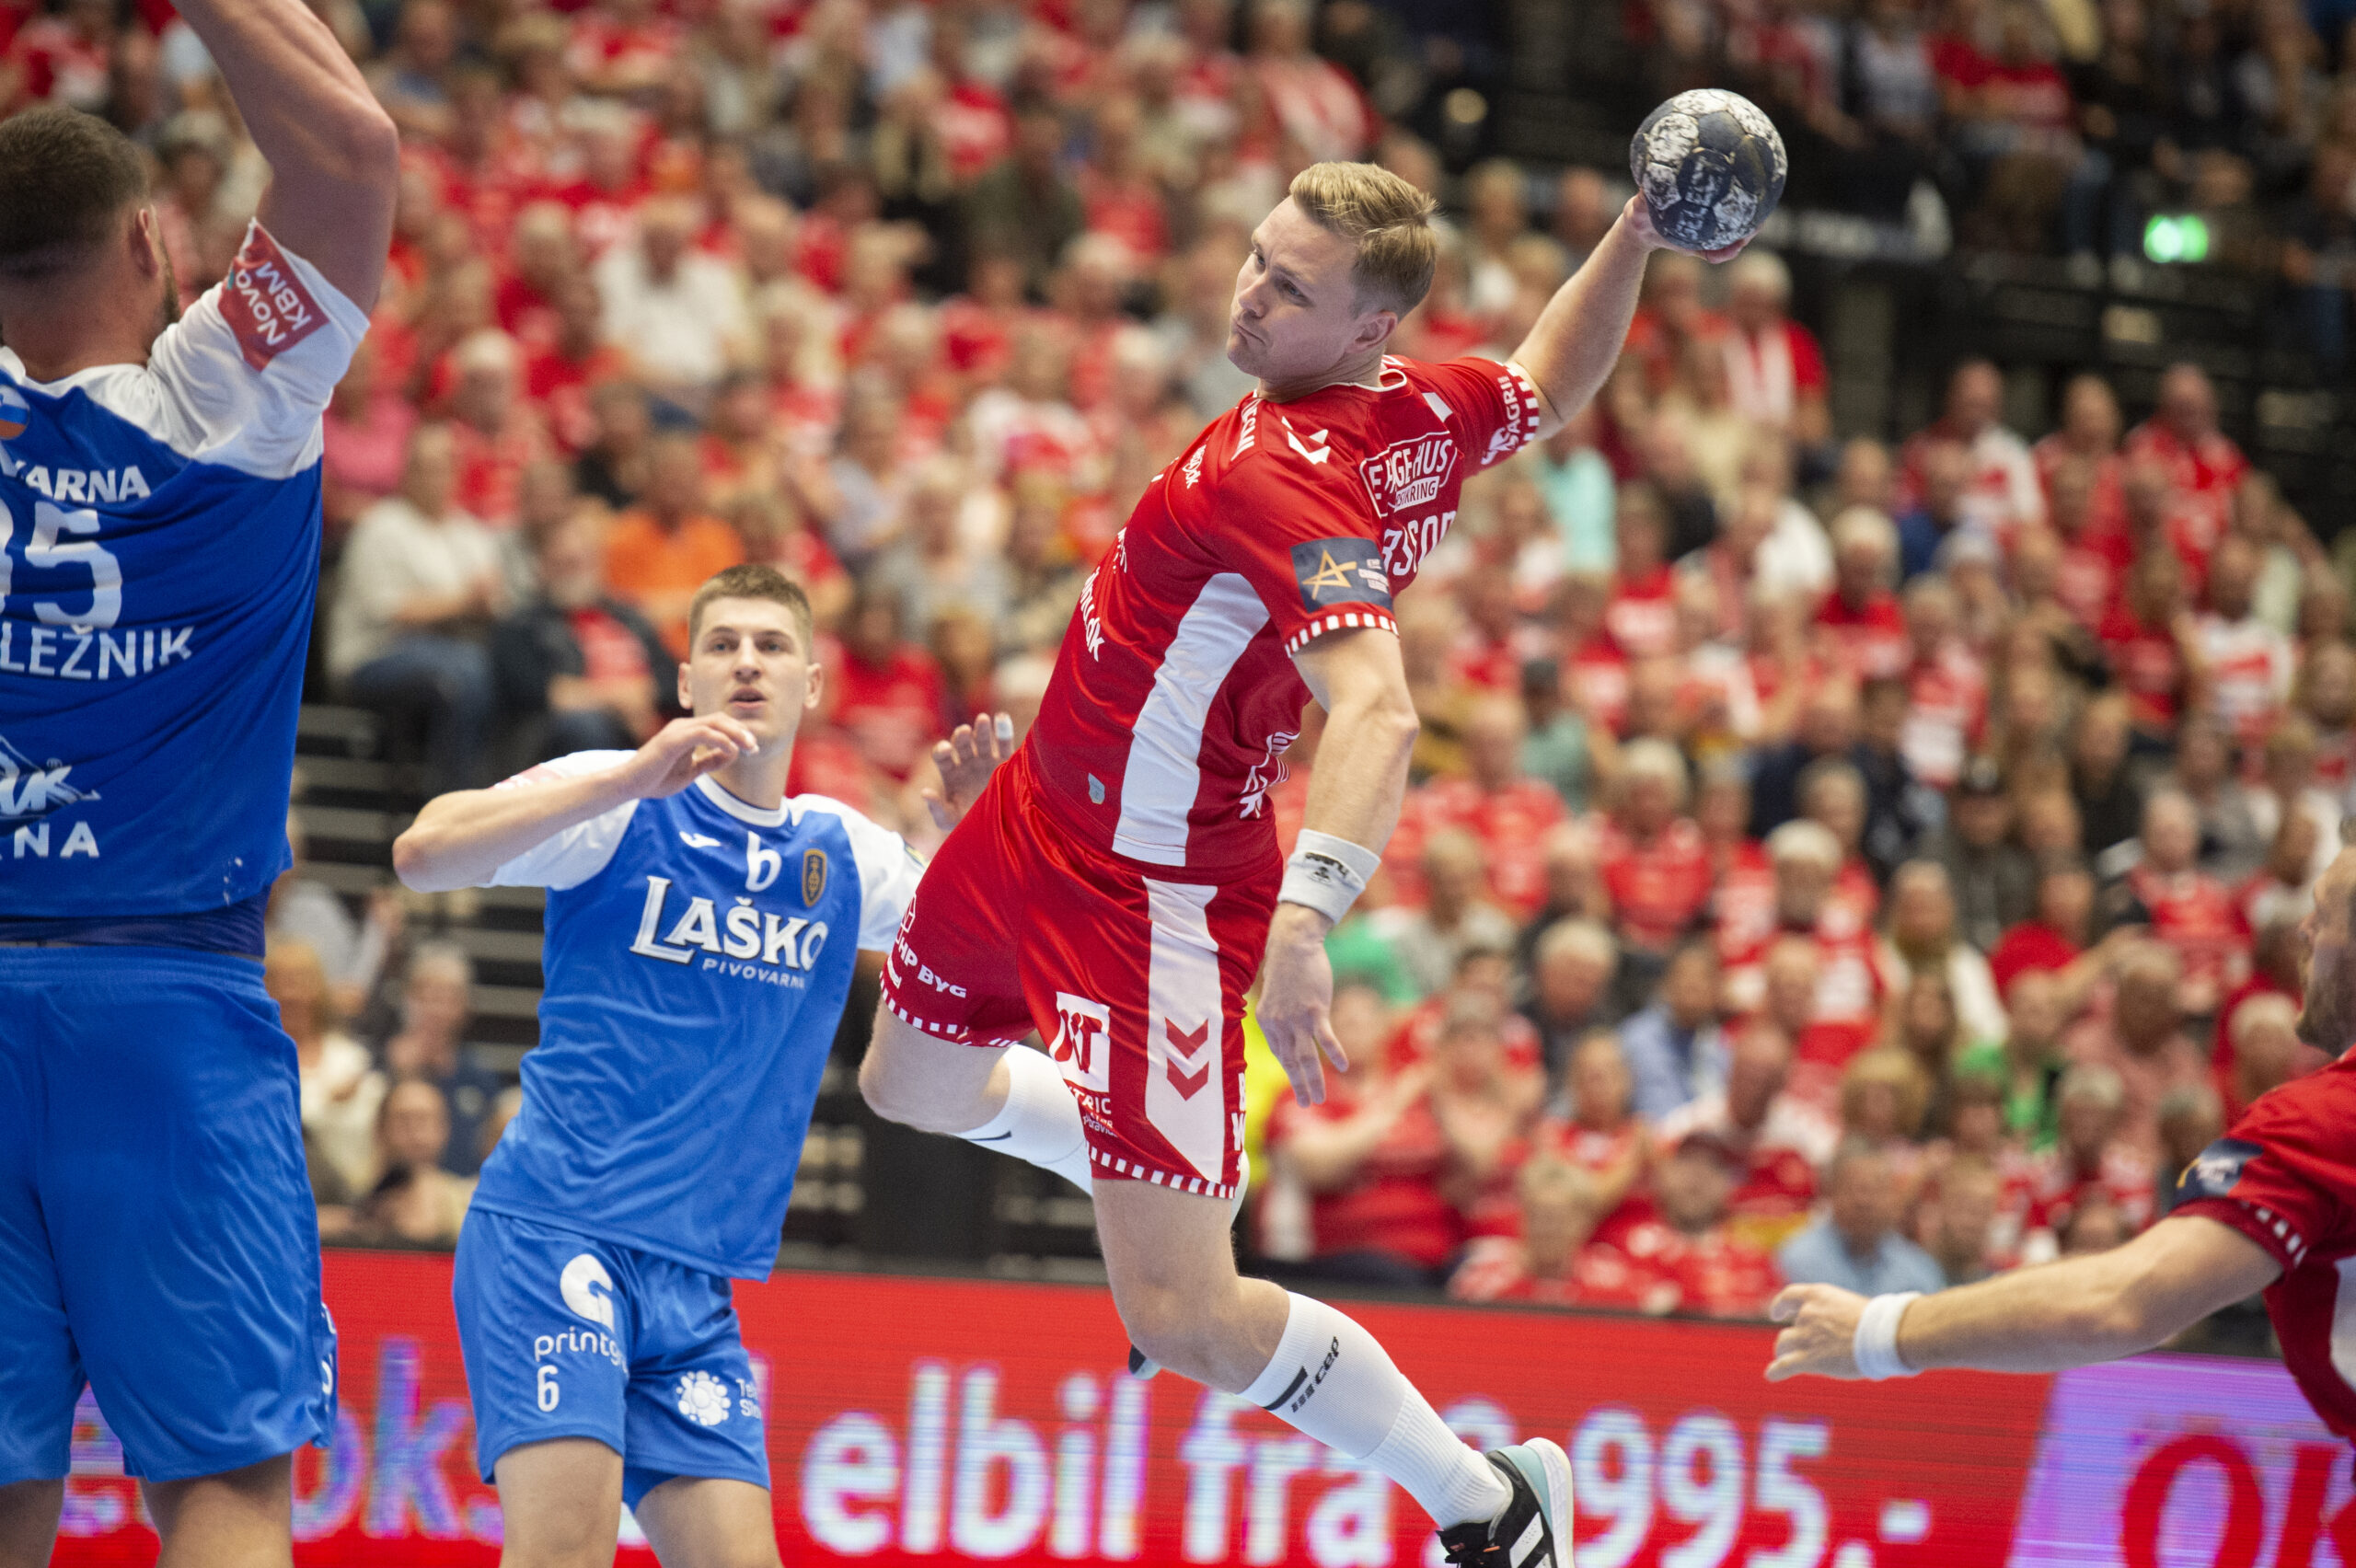 Aalborg Handbold and Aron Palmarsson part ways! Handball Planet